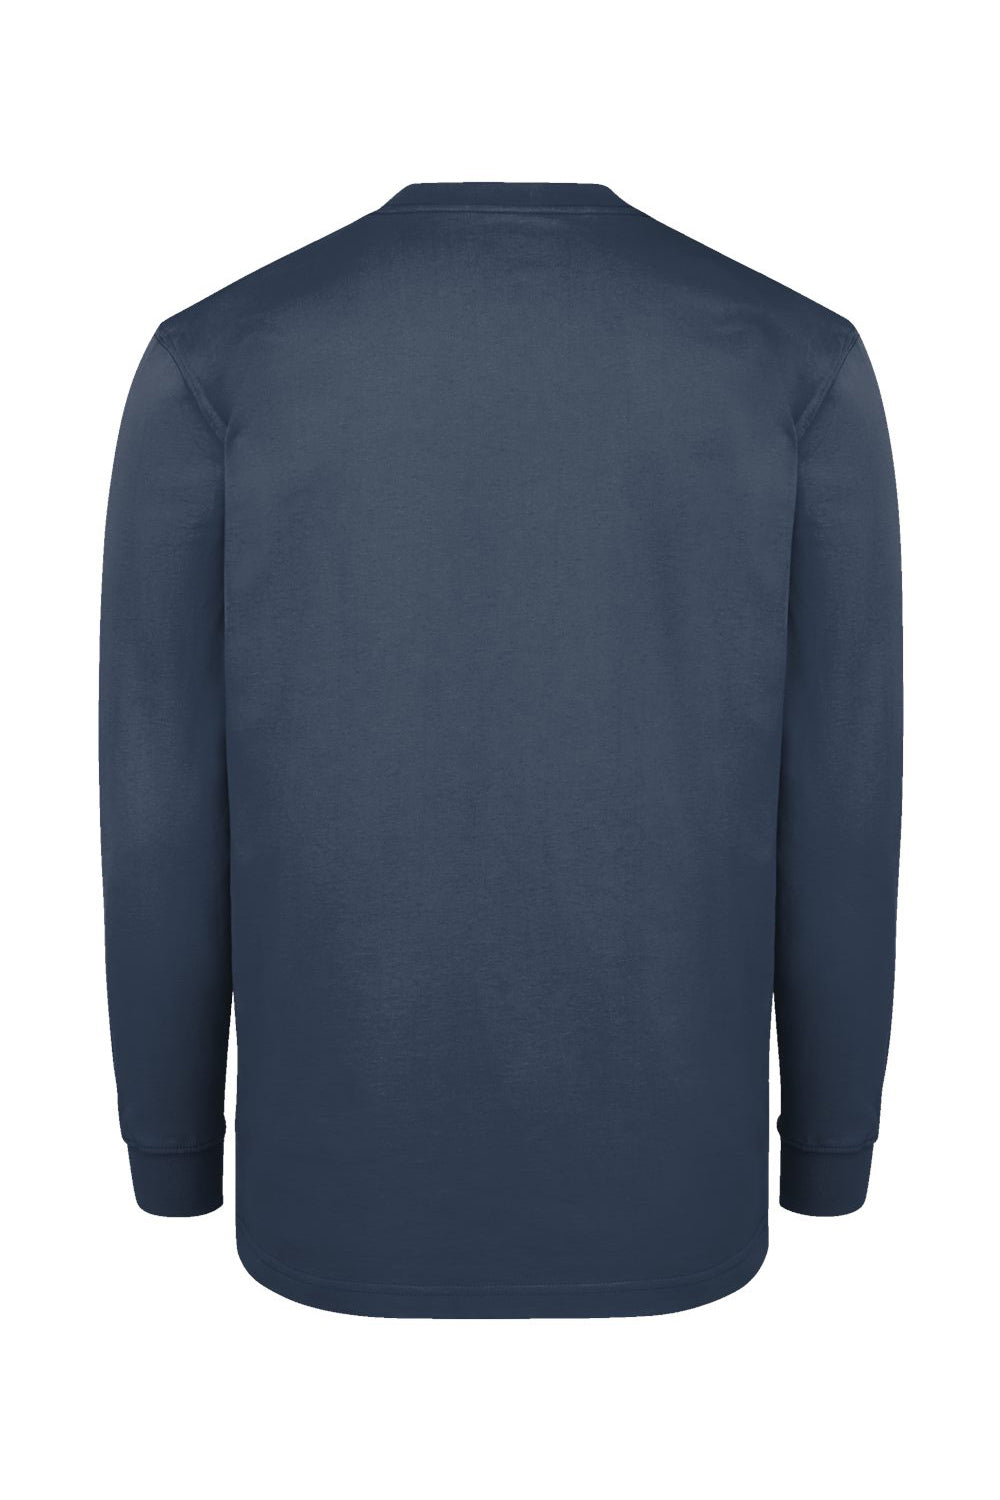 Dickies WL50 Mens Long Sleeve Crewneck T-Shirt w/ Pocket Dark Navy Blue Flat Back